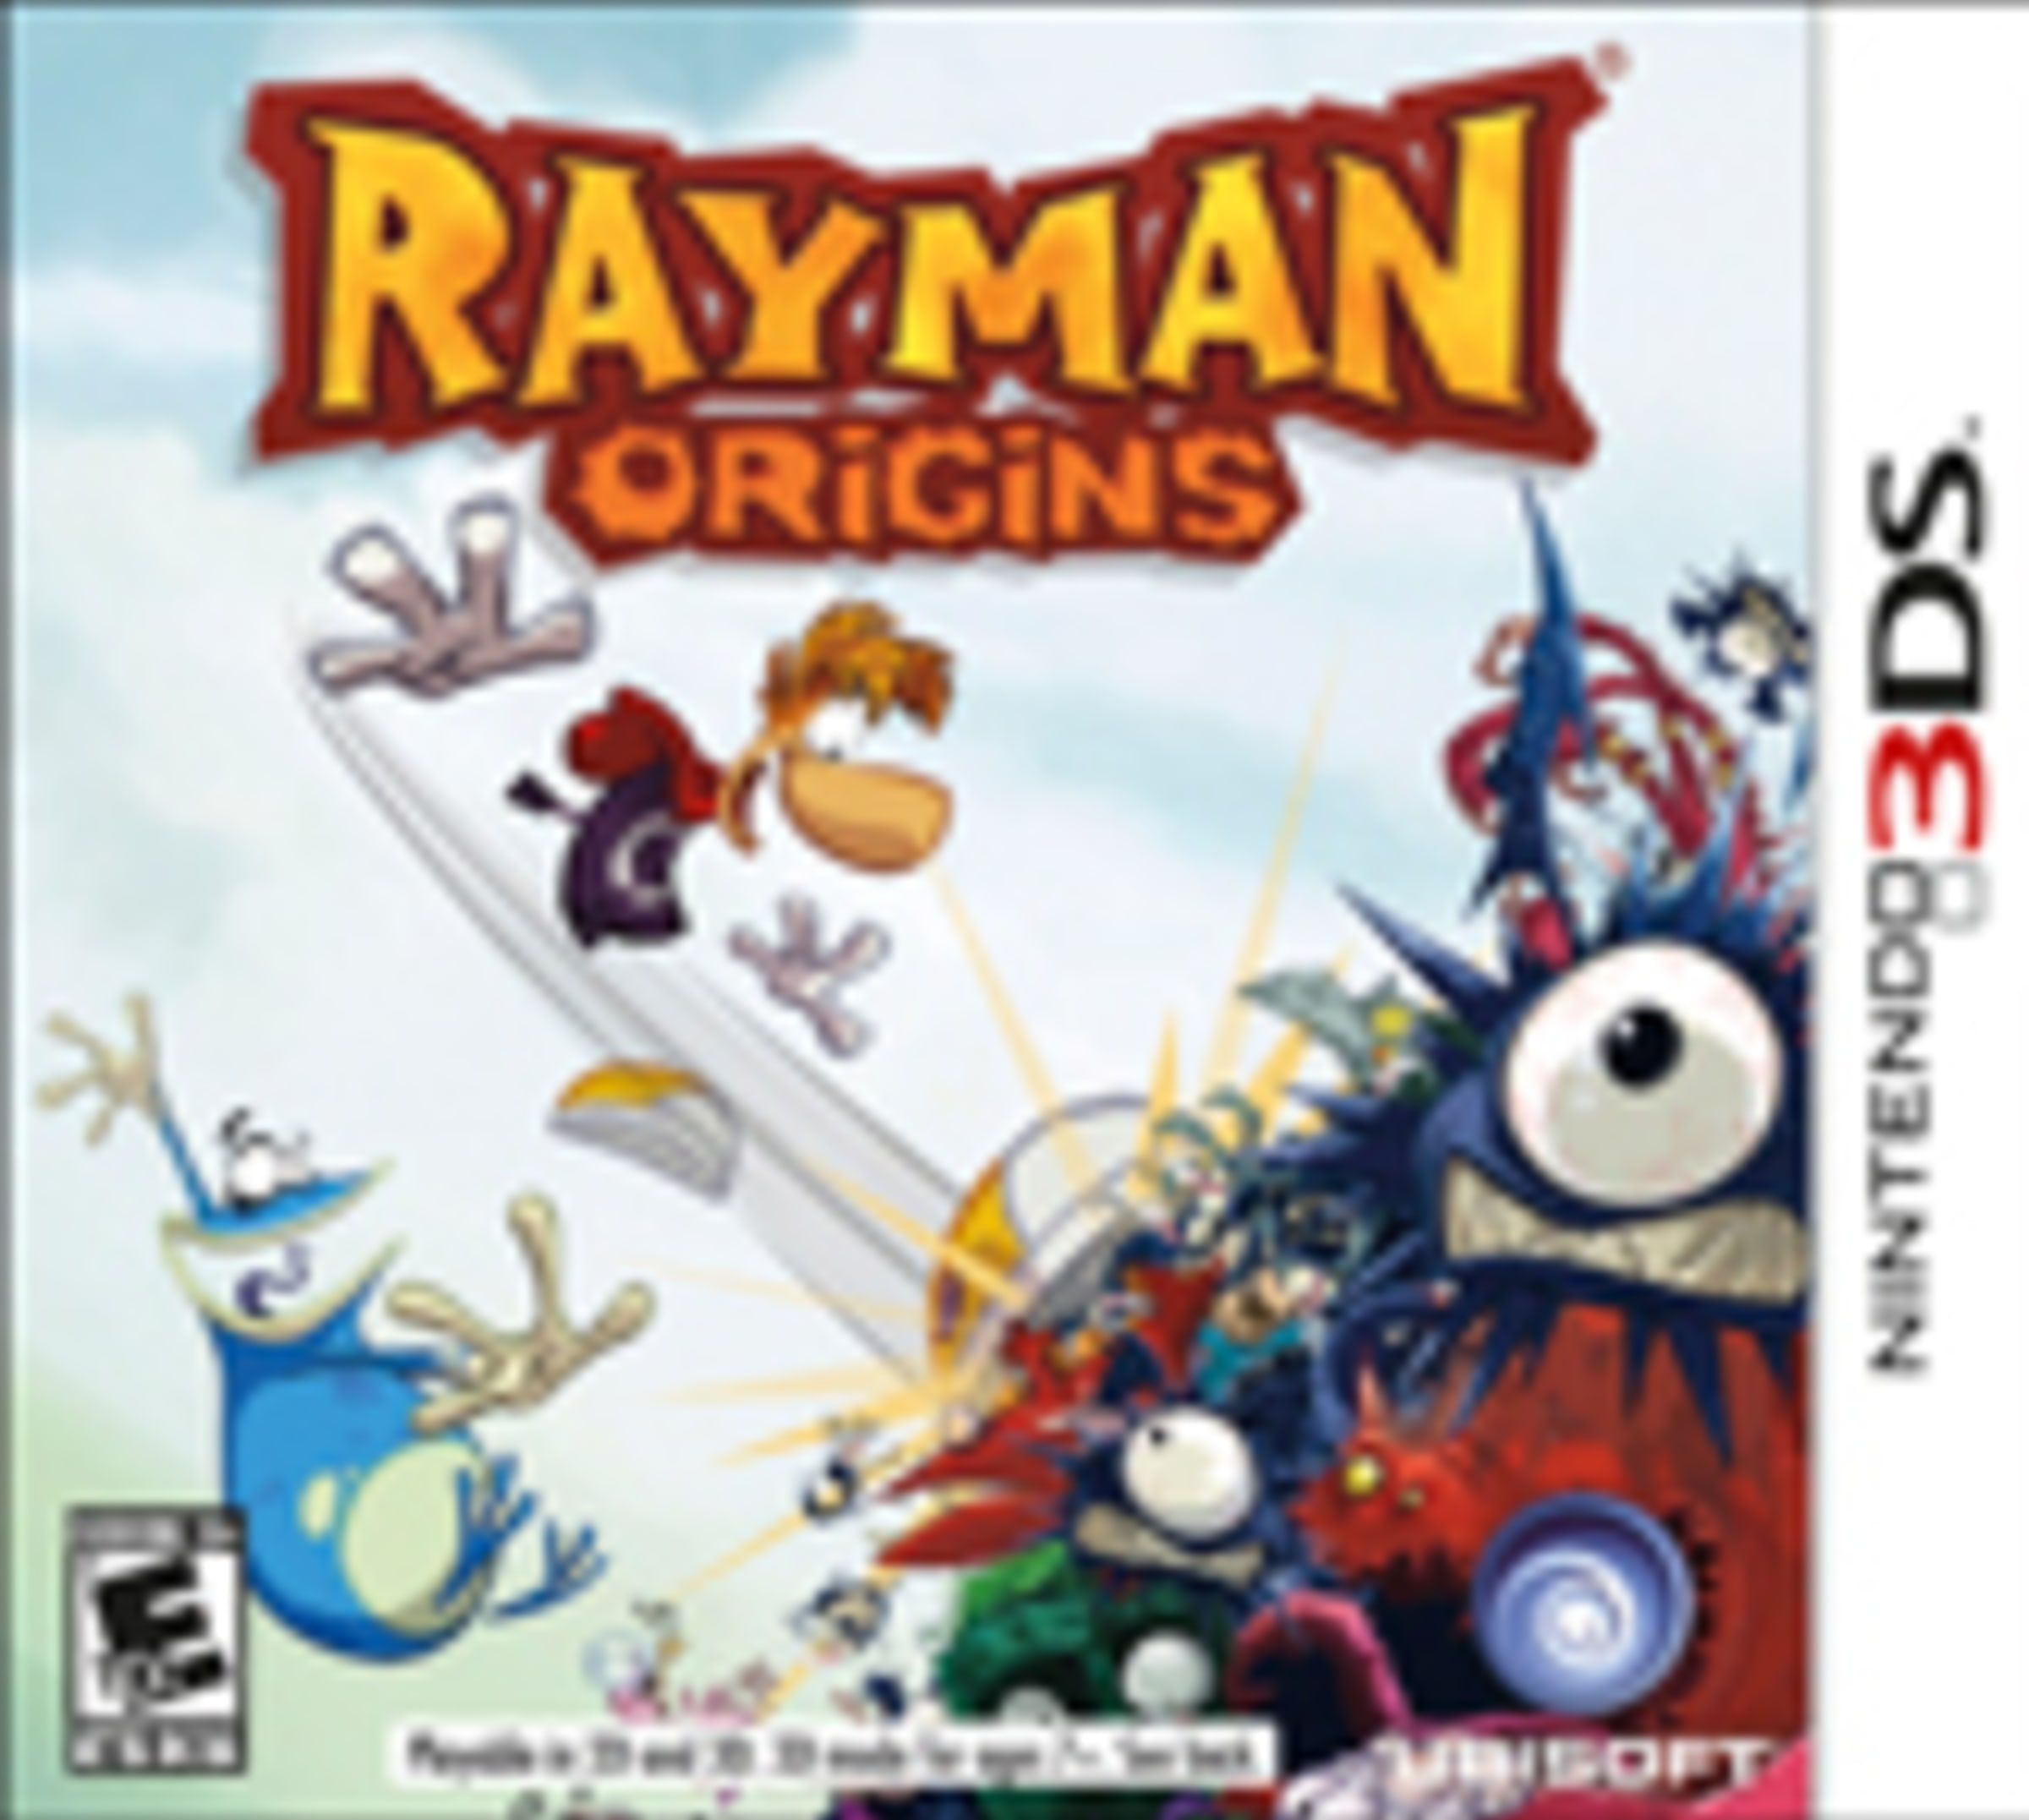 Addition Complaint West Rayman Origins for Nintendo 3DS - Nintendo Official Site